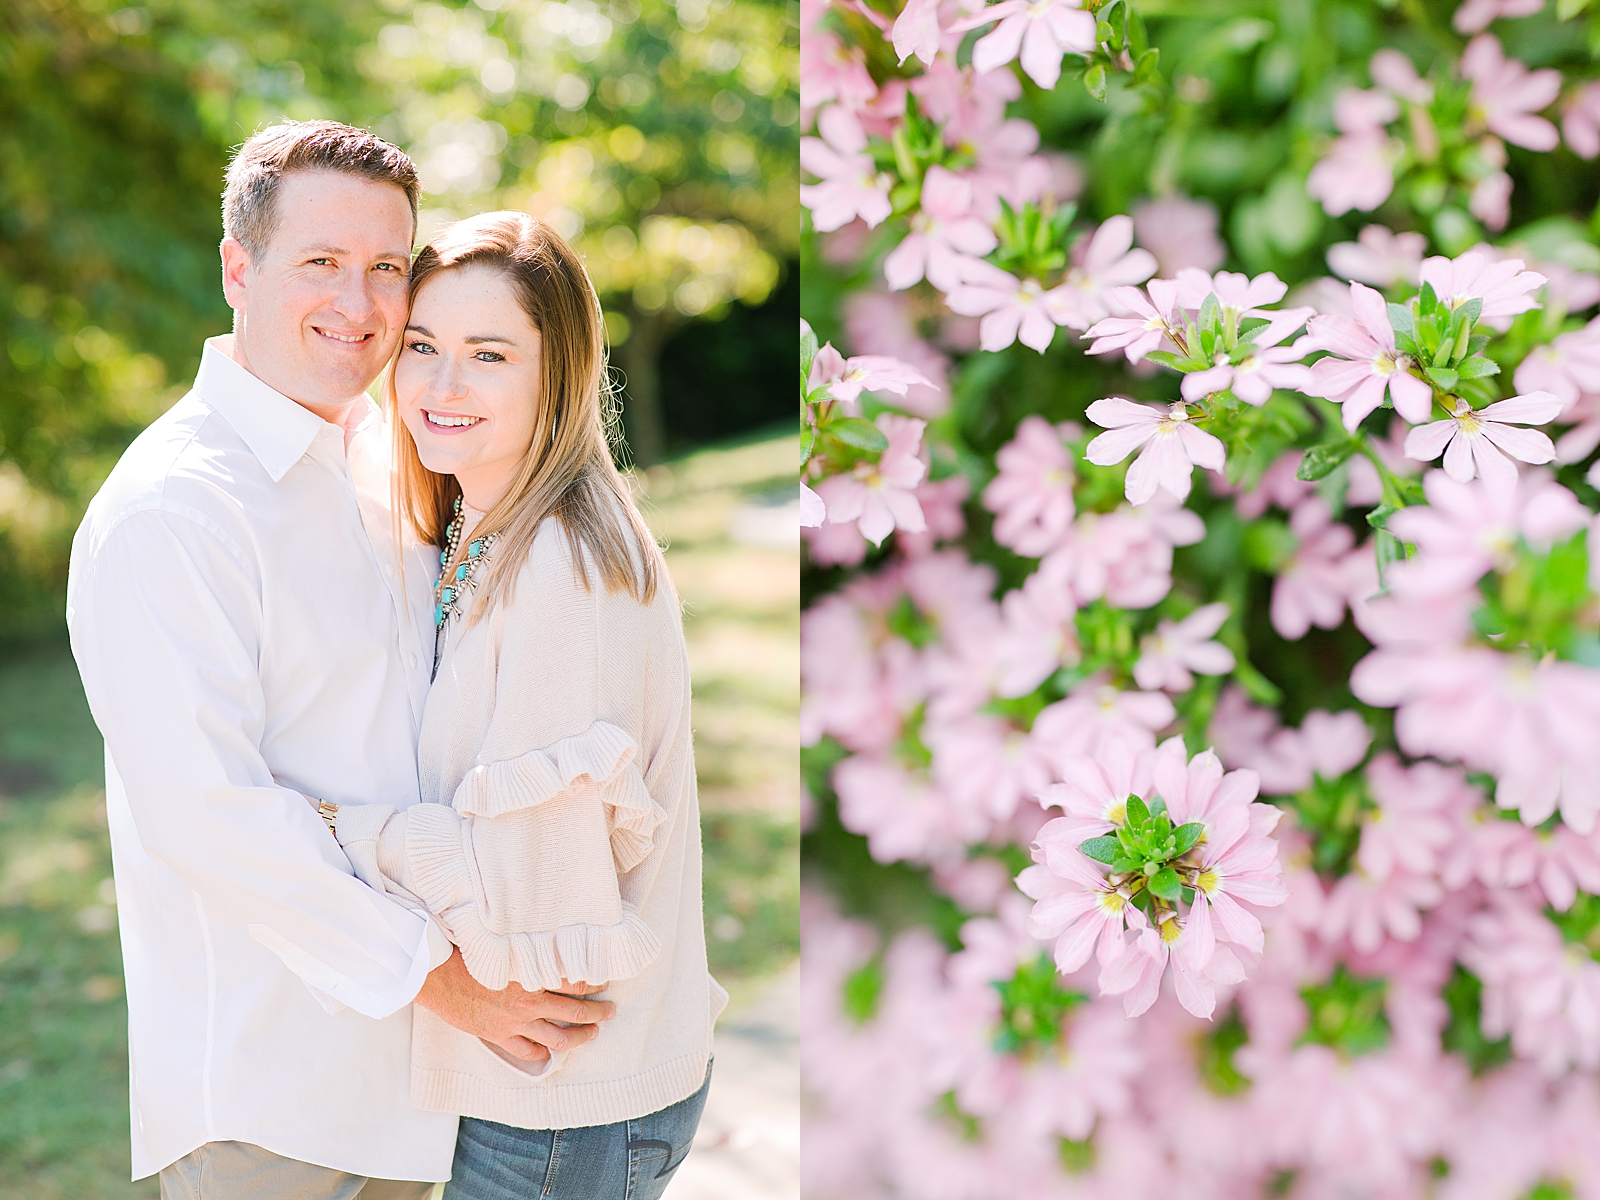 North Carolina Arboretum Couple Smiling at Camera and Pink Flower Detail Photos